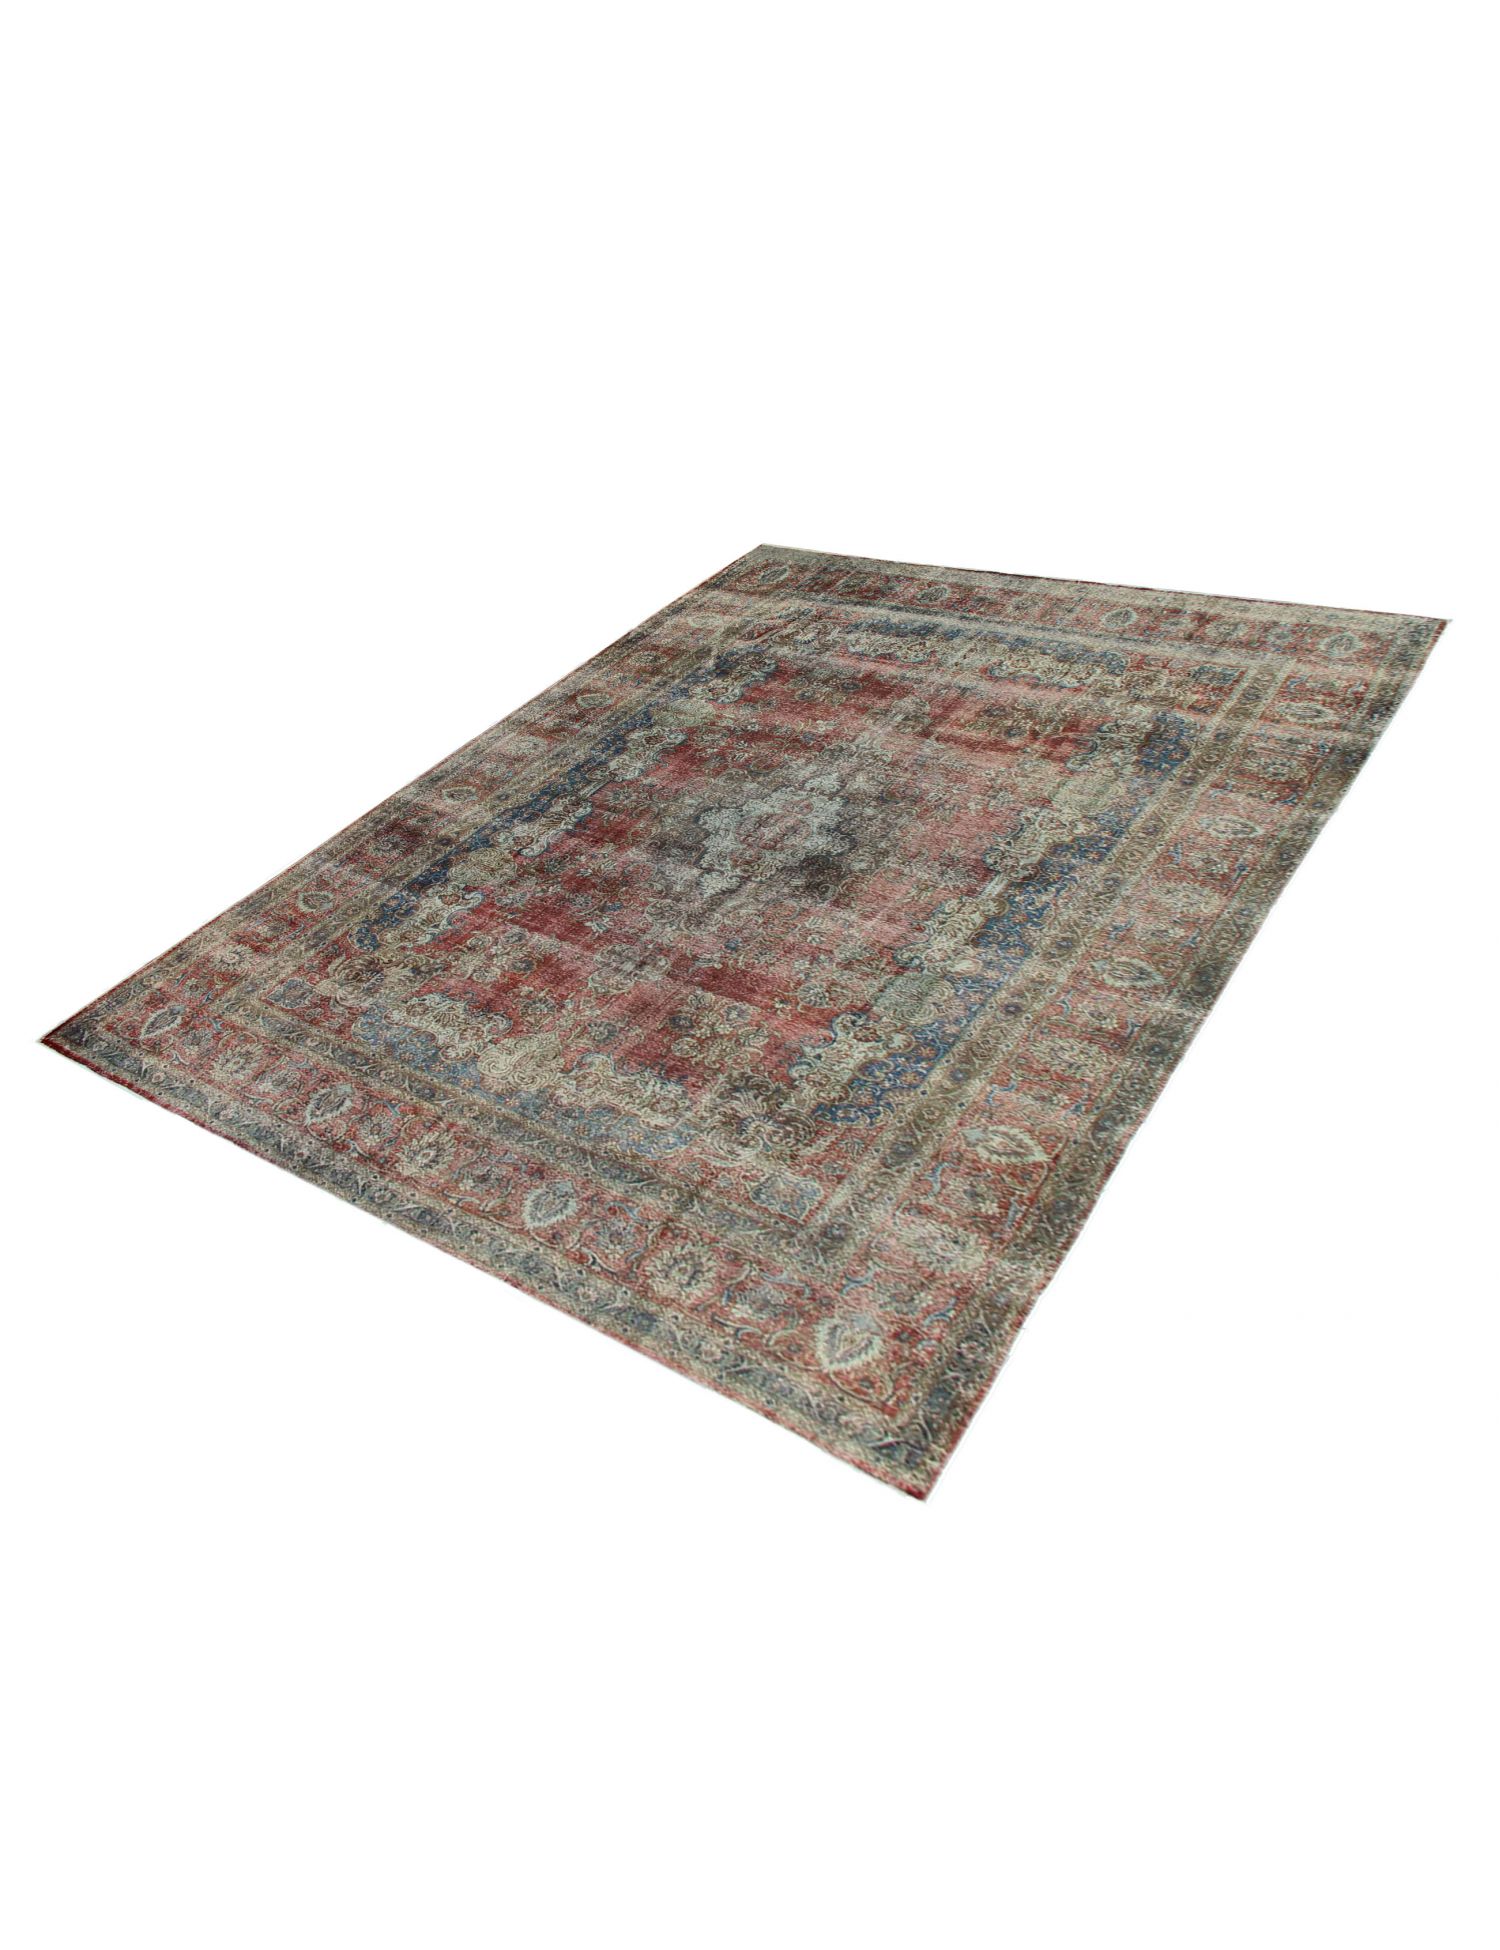 Persian Vintage Carpet  brown <br/>500 x 340 cm